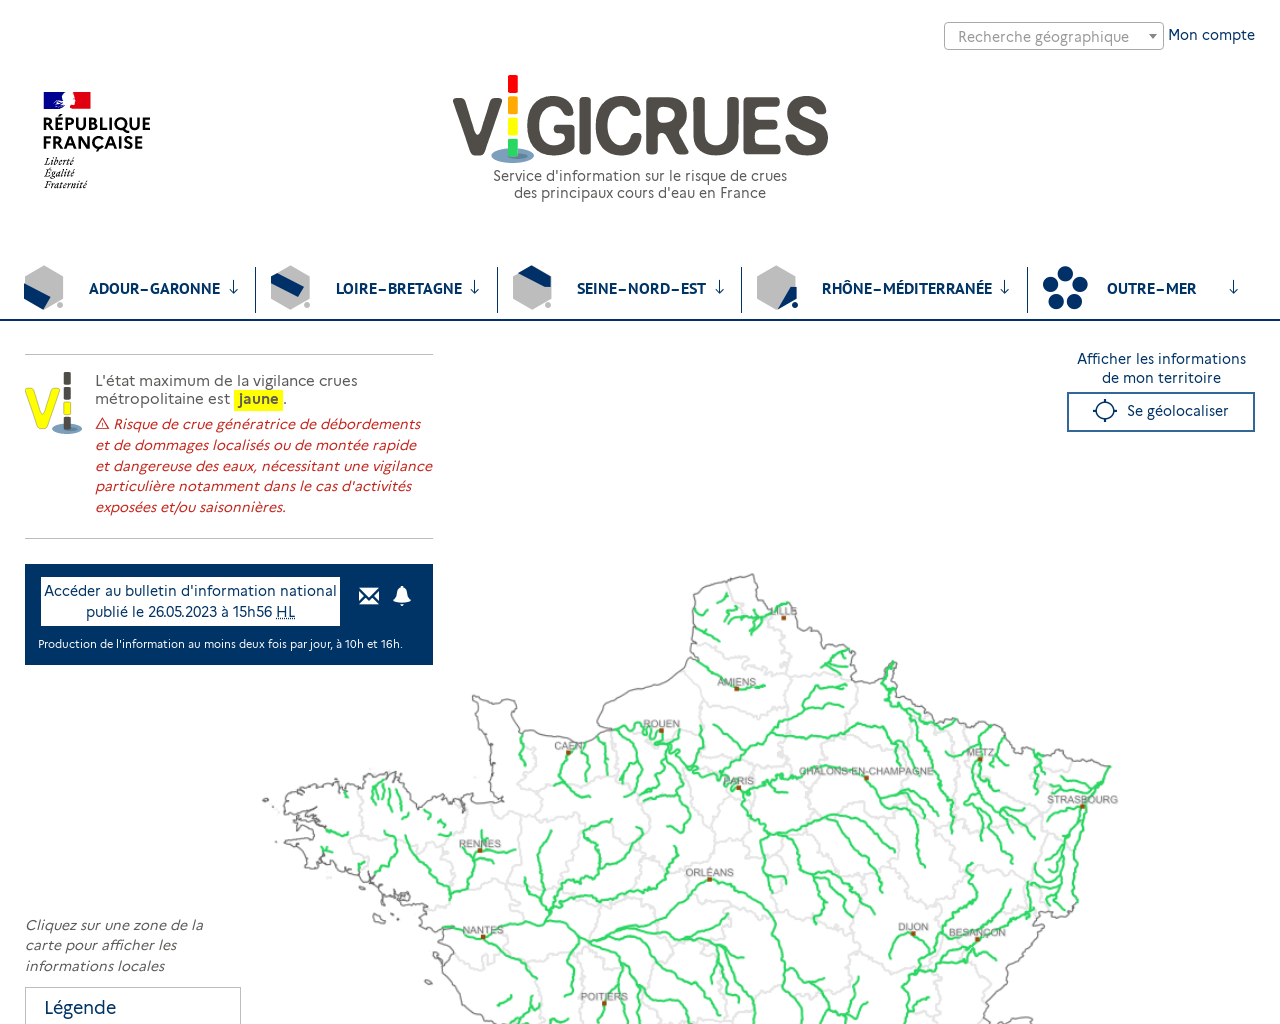 www.vigicrues.gouv.fr